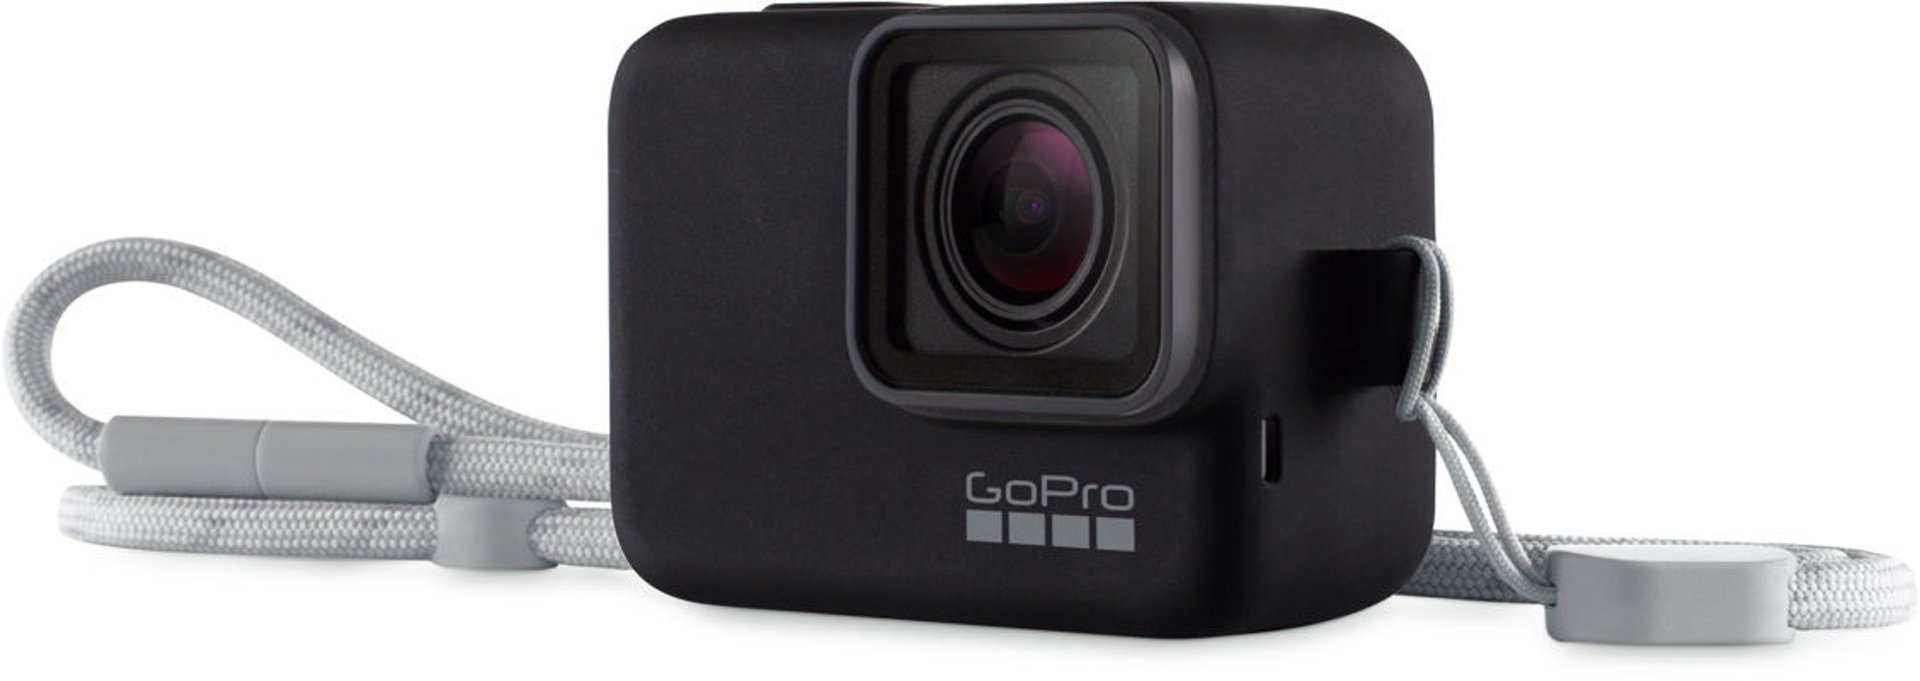 Футляр GoPro для камеры, черный